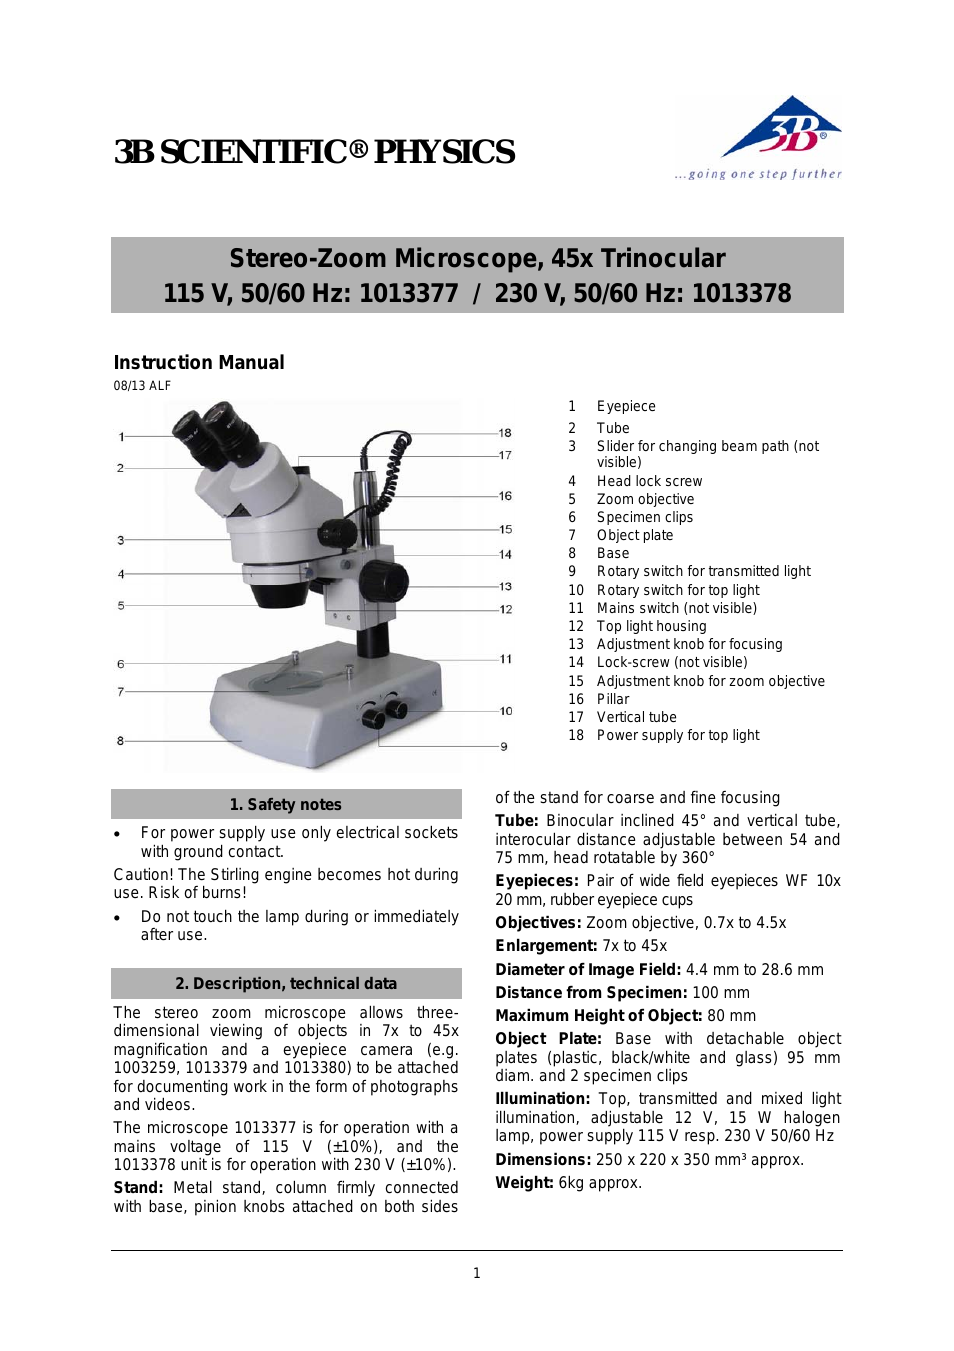 Stereo-Zoom Microscope, 45x, Trinocular (115 V, 50__60 Hz)